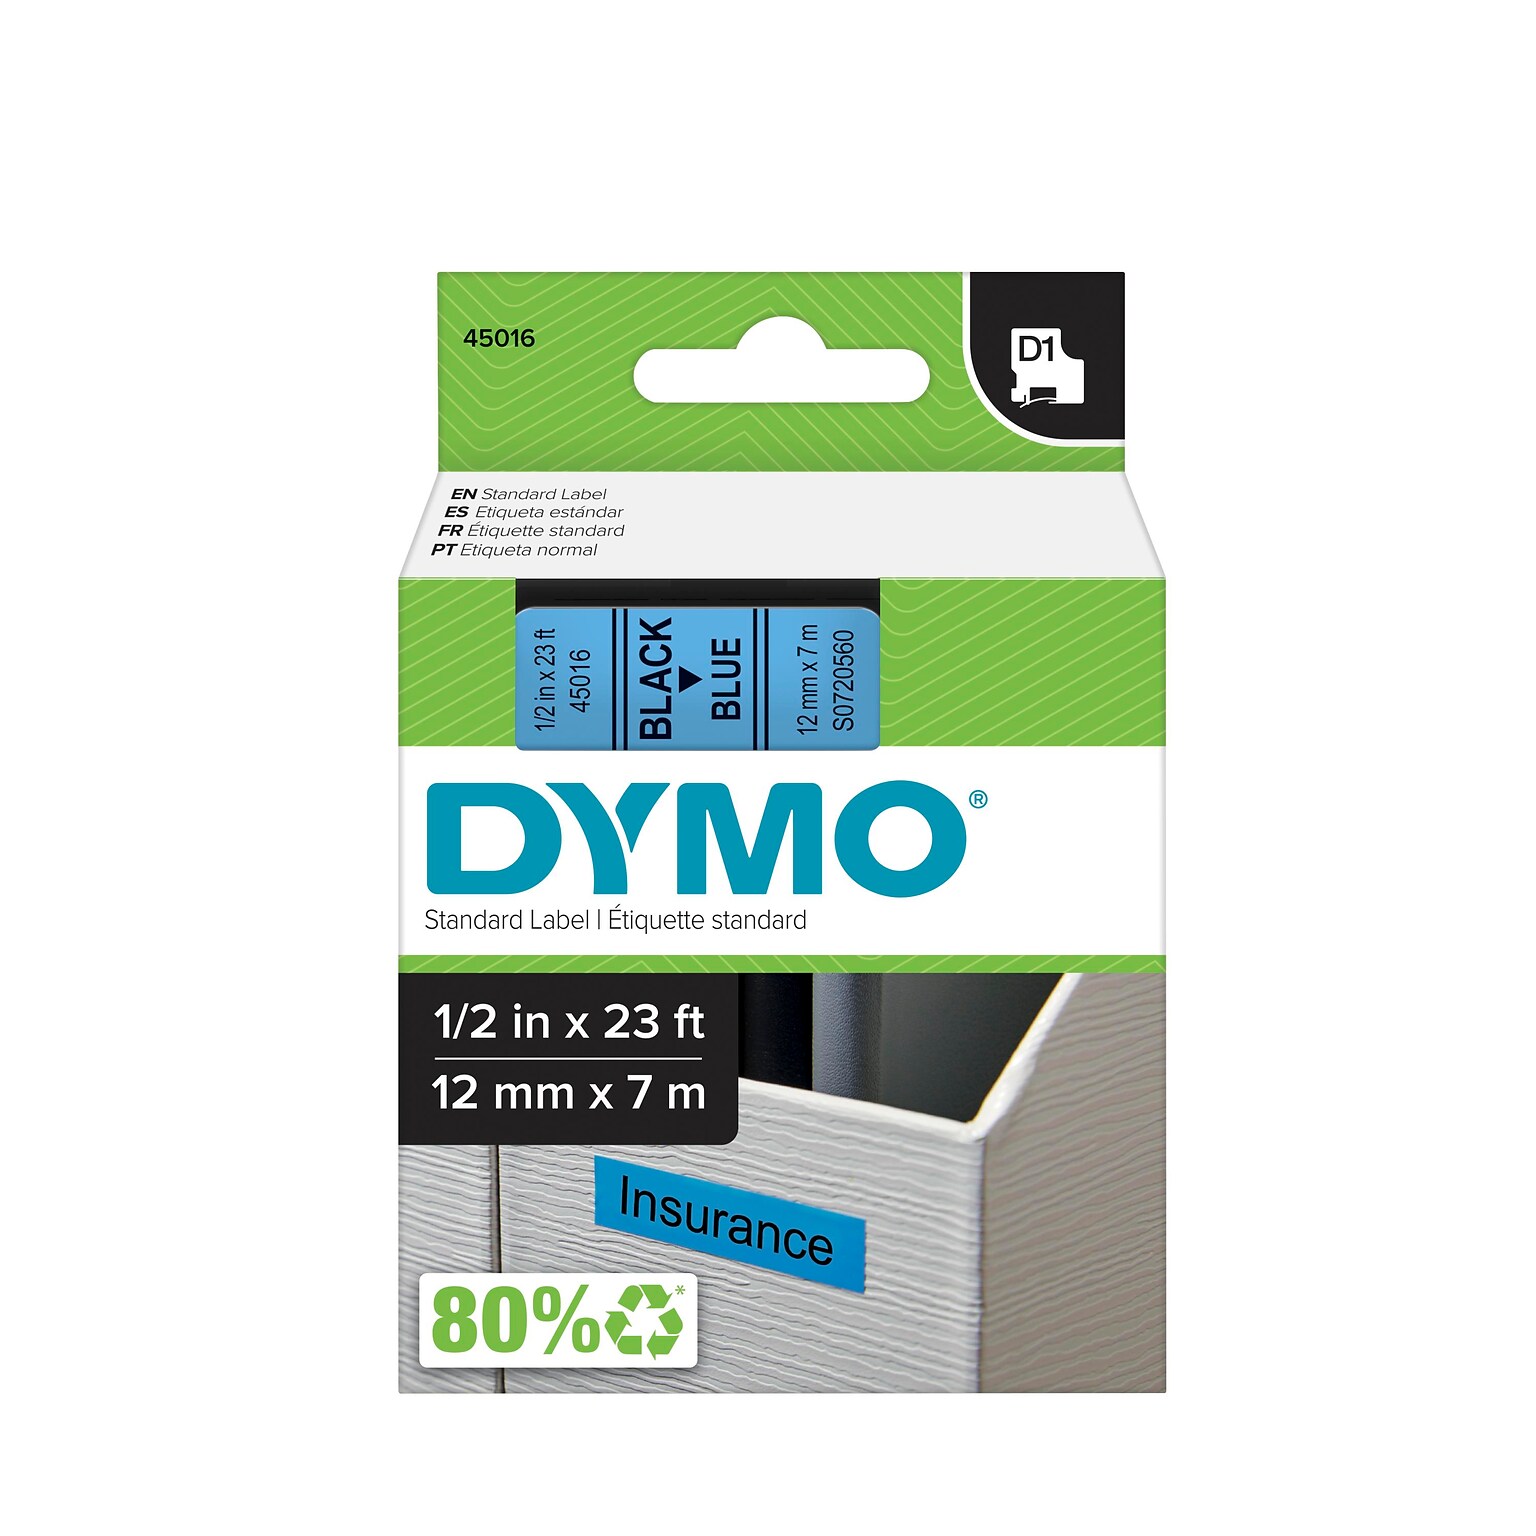 DYMO D1 Standard 45016 Label Maker Tape, 1/2 x 23, Black on Blue (45016)